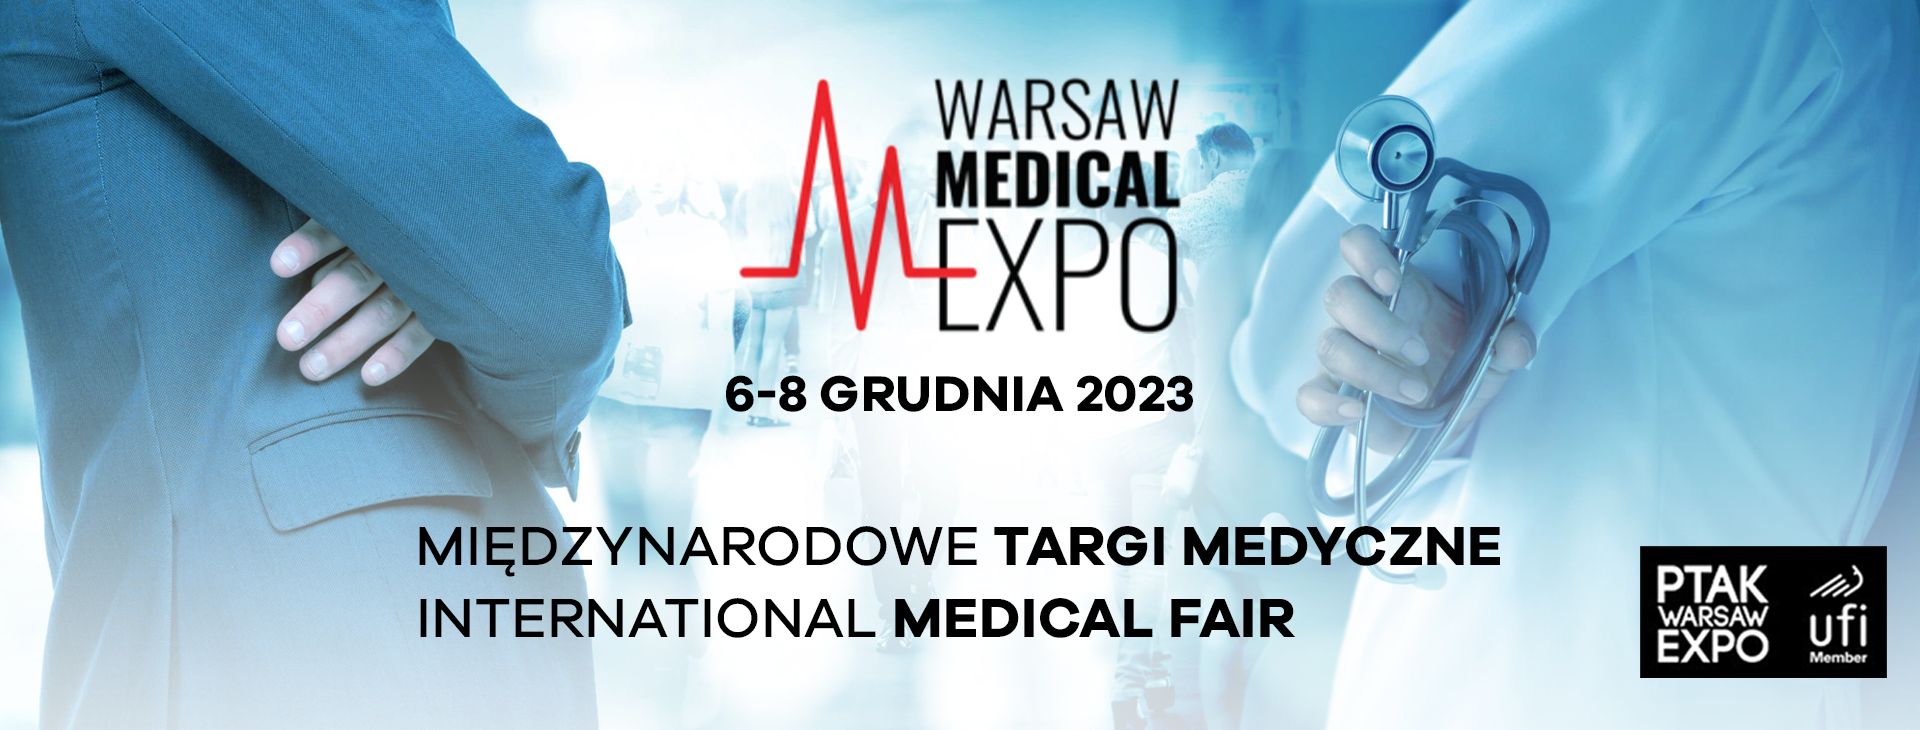 Warsaw Medical Expo 2023.jpg